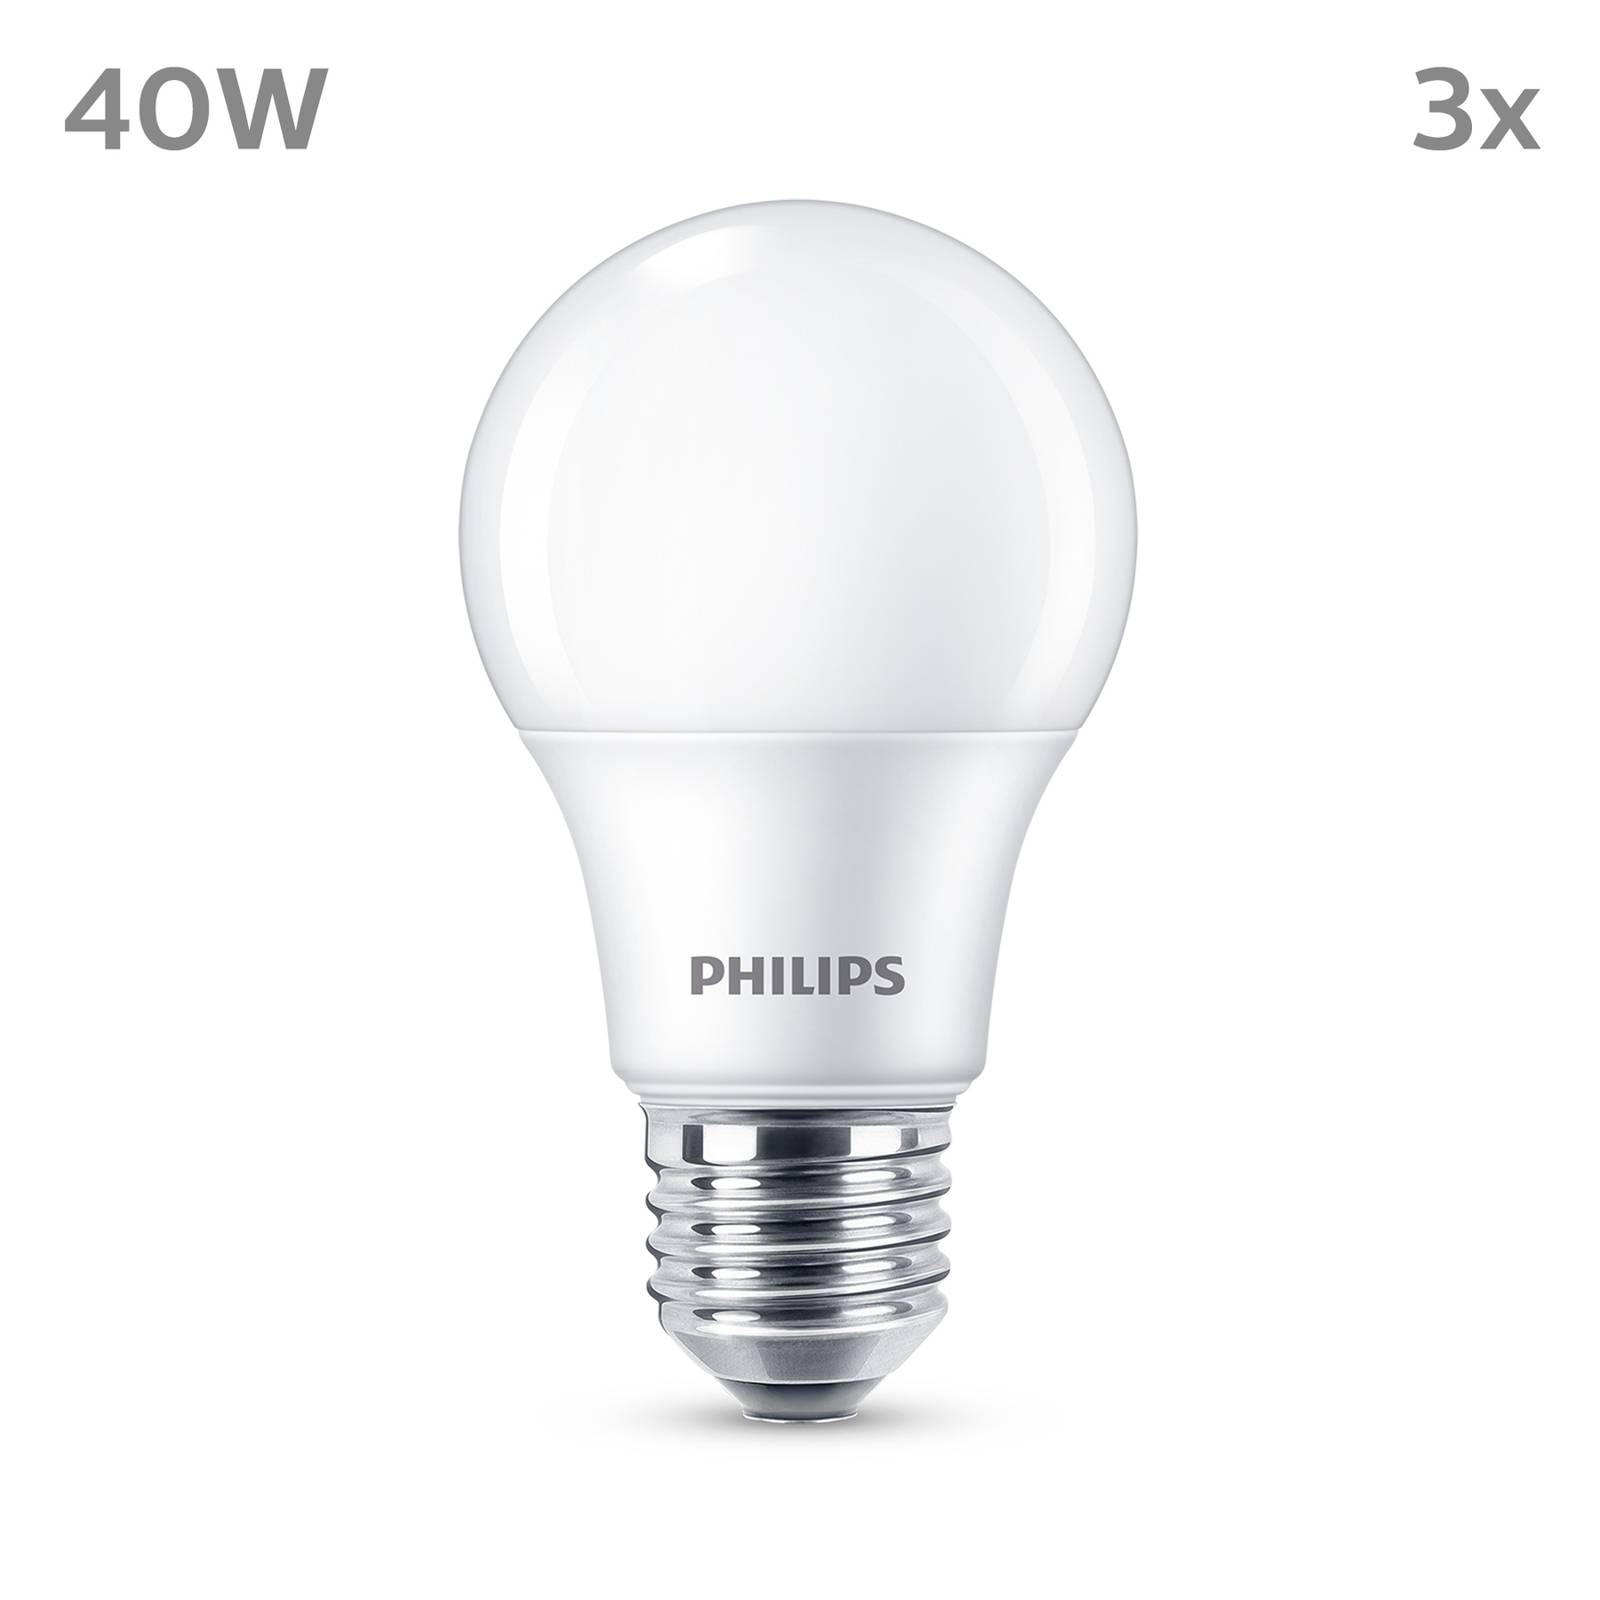 Philips Philips LED žárovka E27 4,9W 470lm 2700K matná 3ks